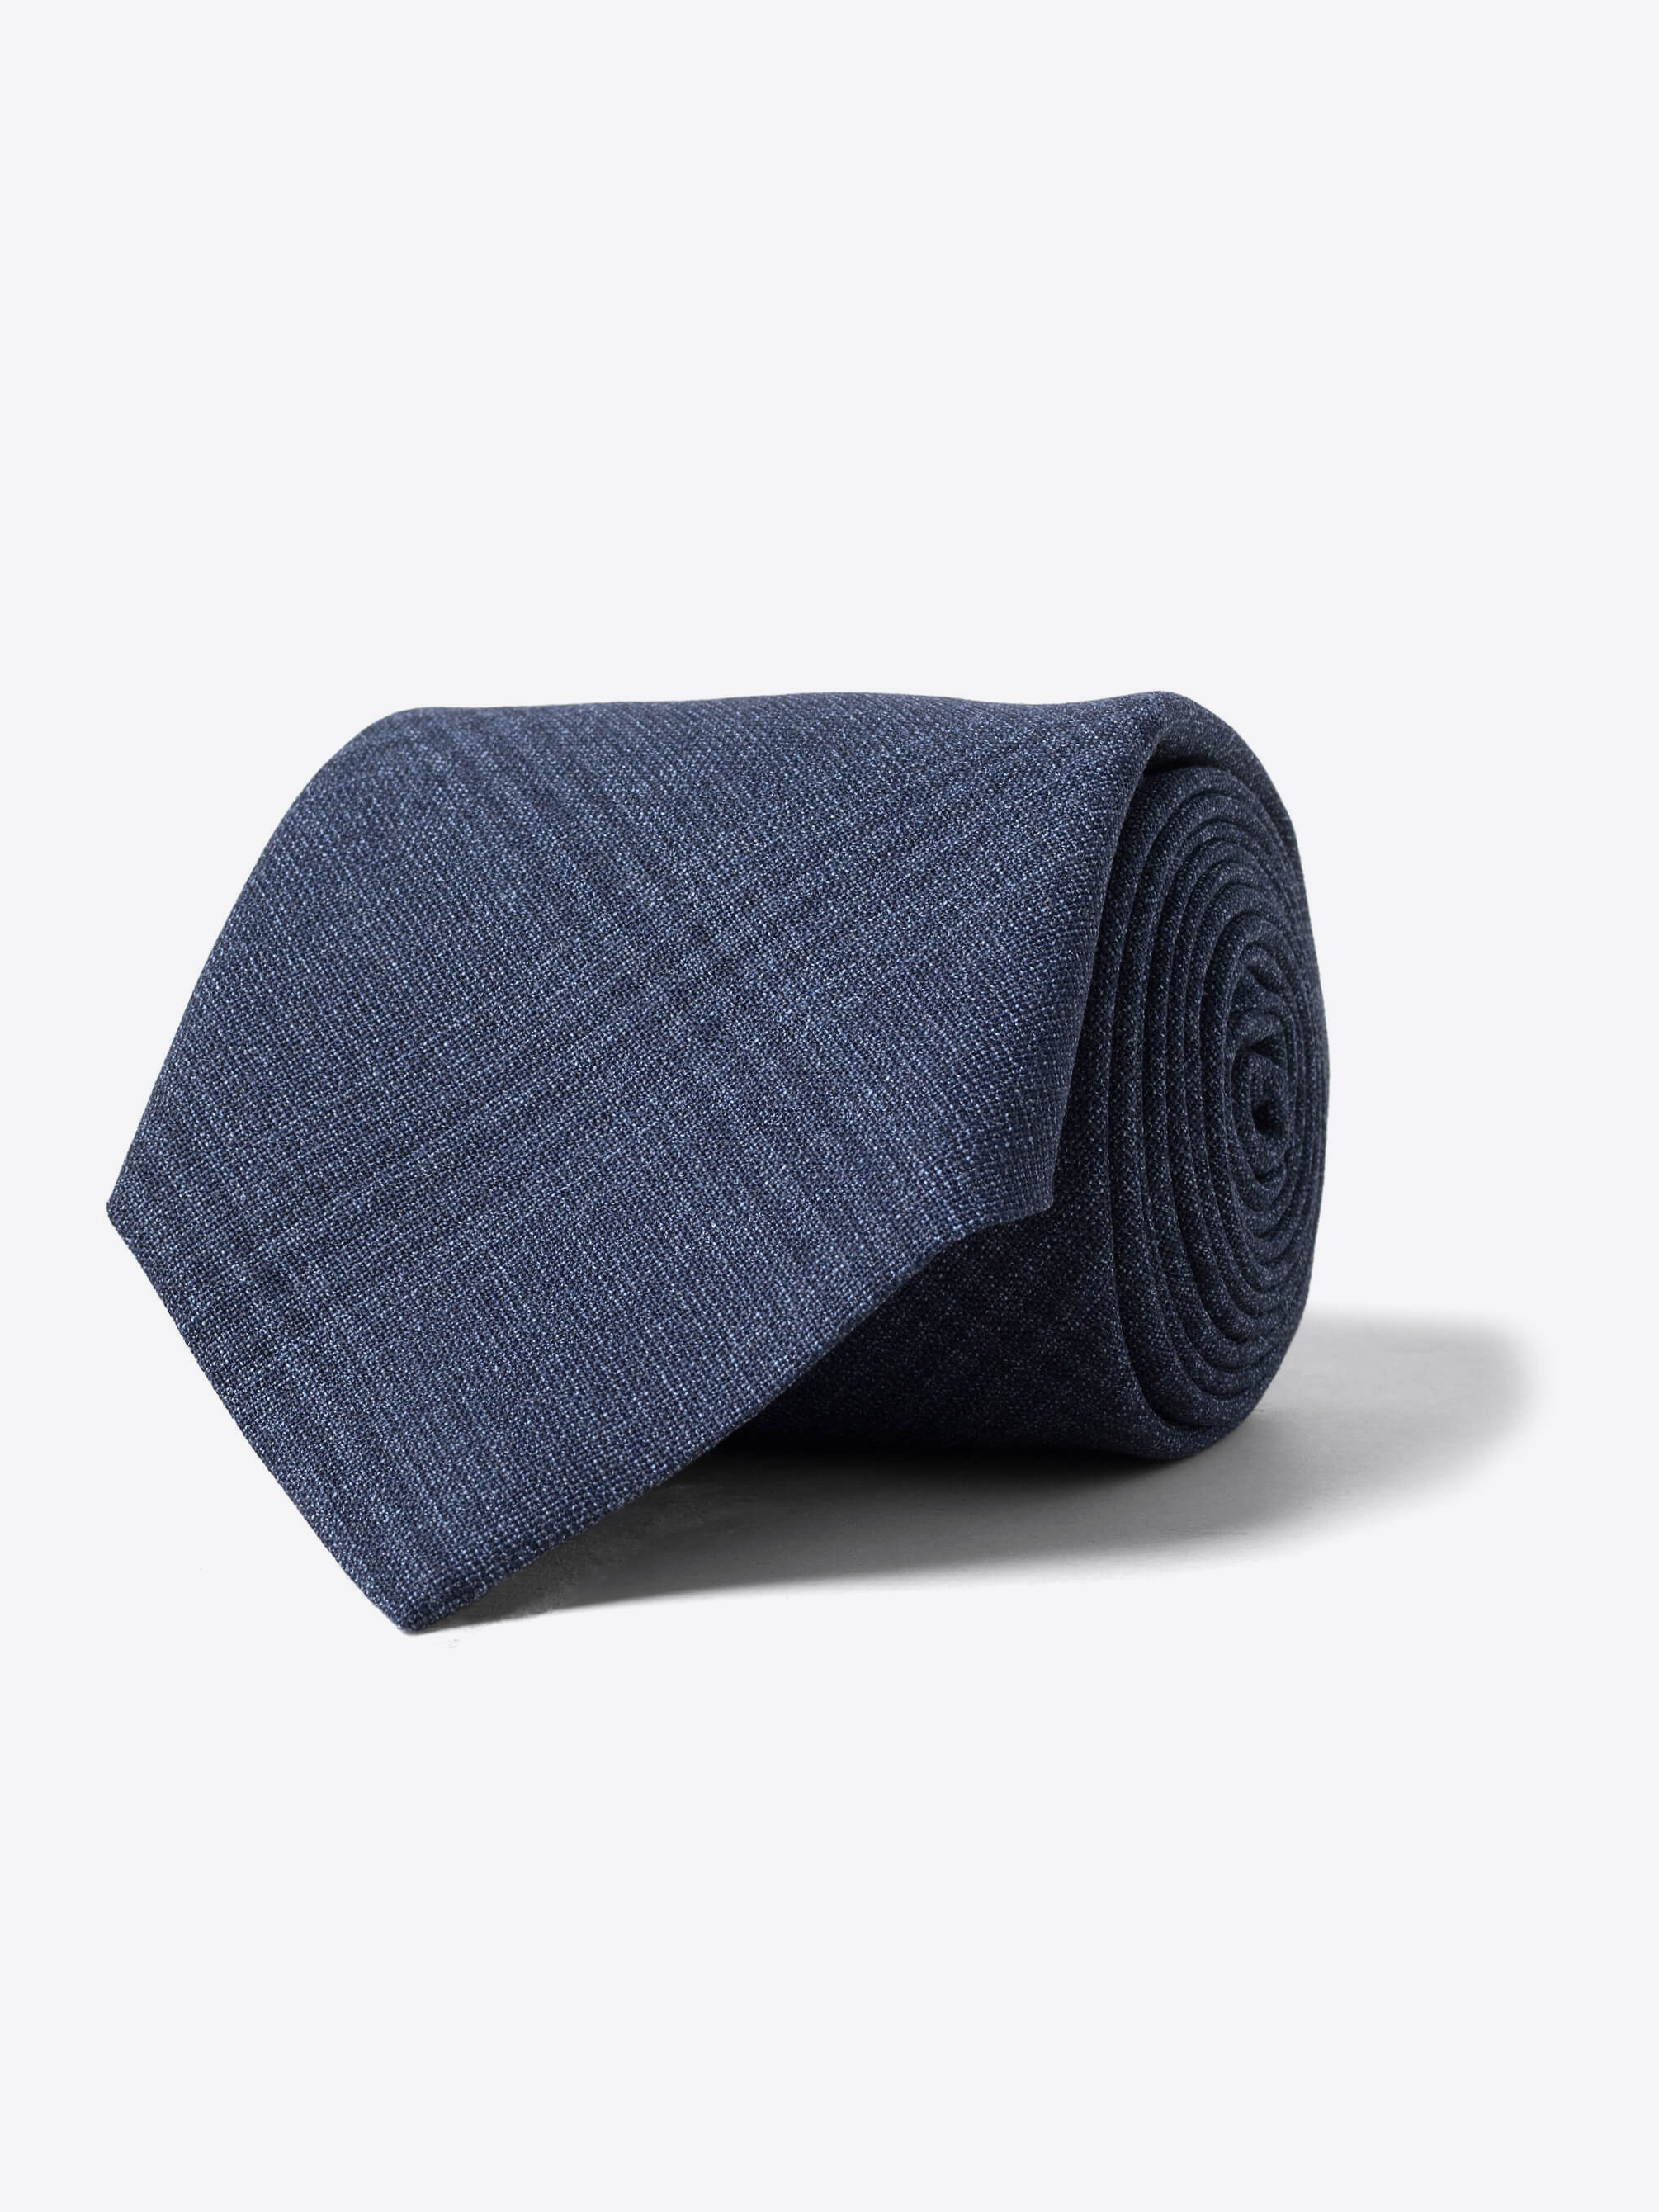 Zoom Image of Slate Blue Plaid Wool Tie